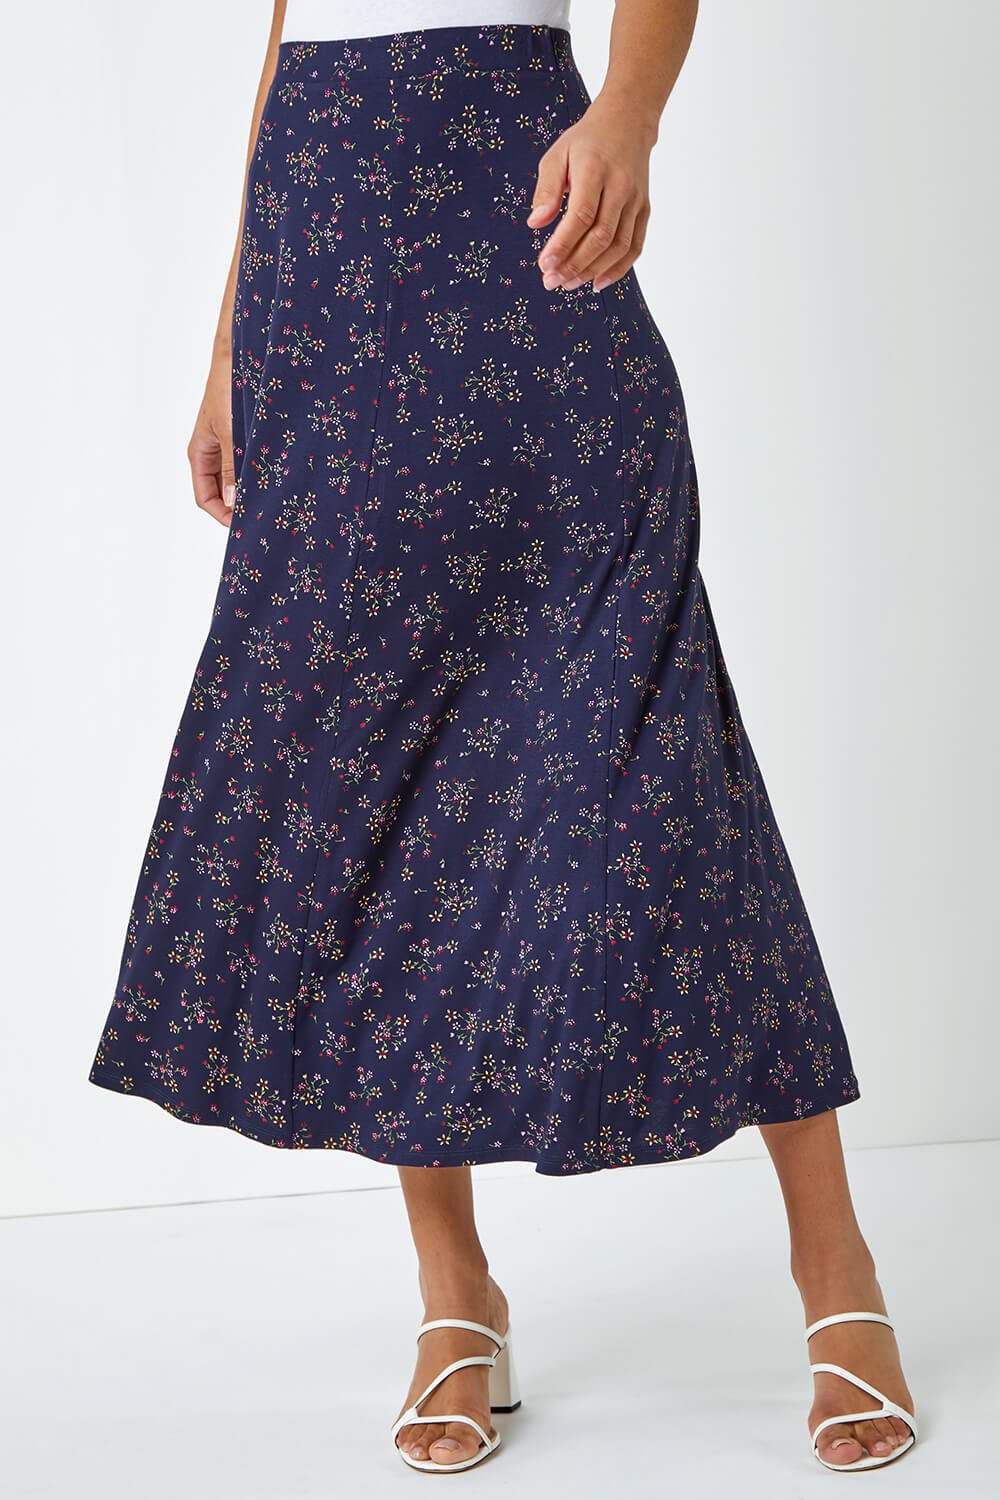 Floral Print Stretch Midi Skirt in Navy - Roman Originals UK